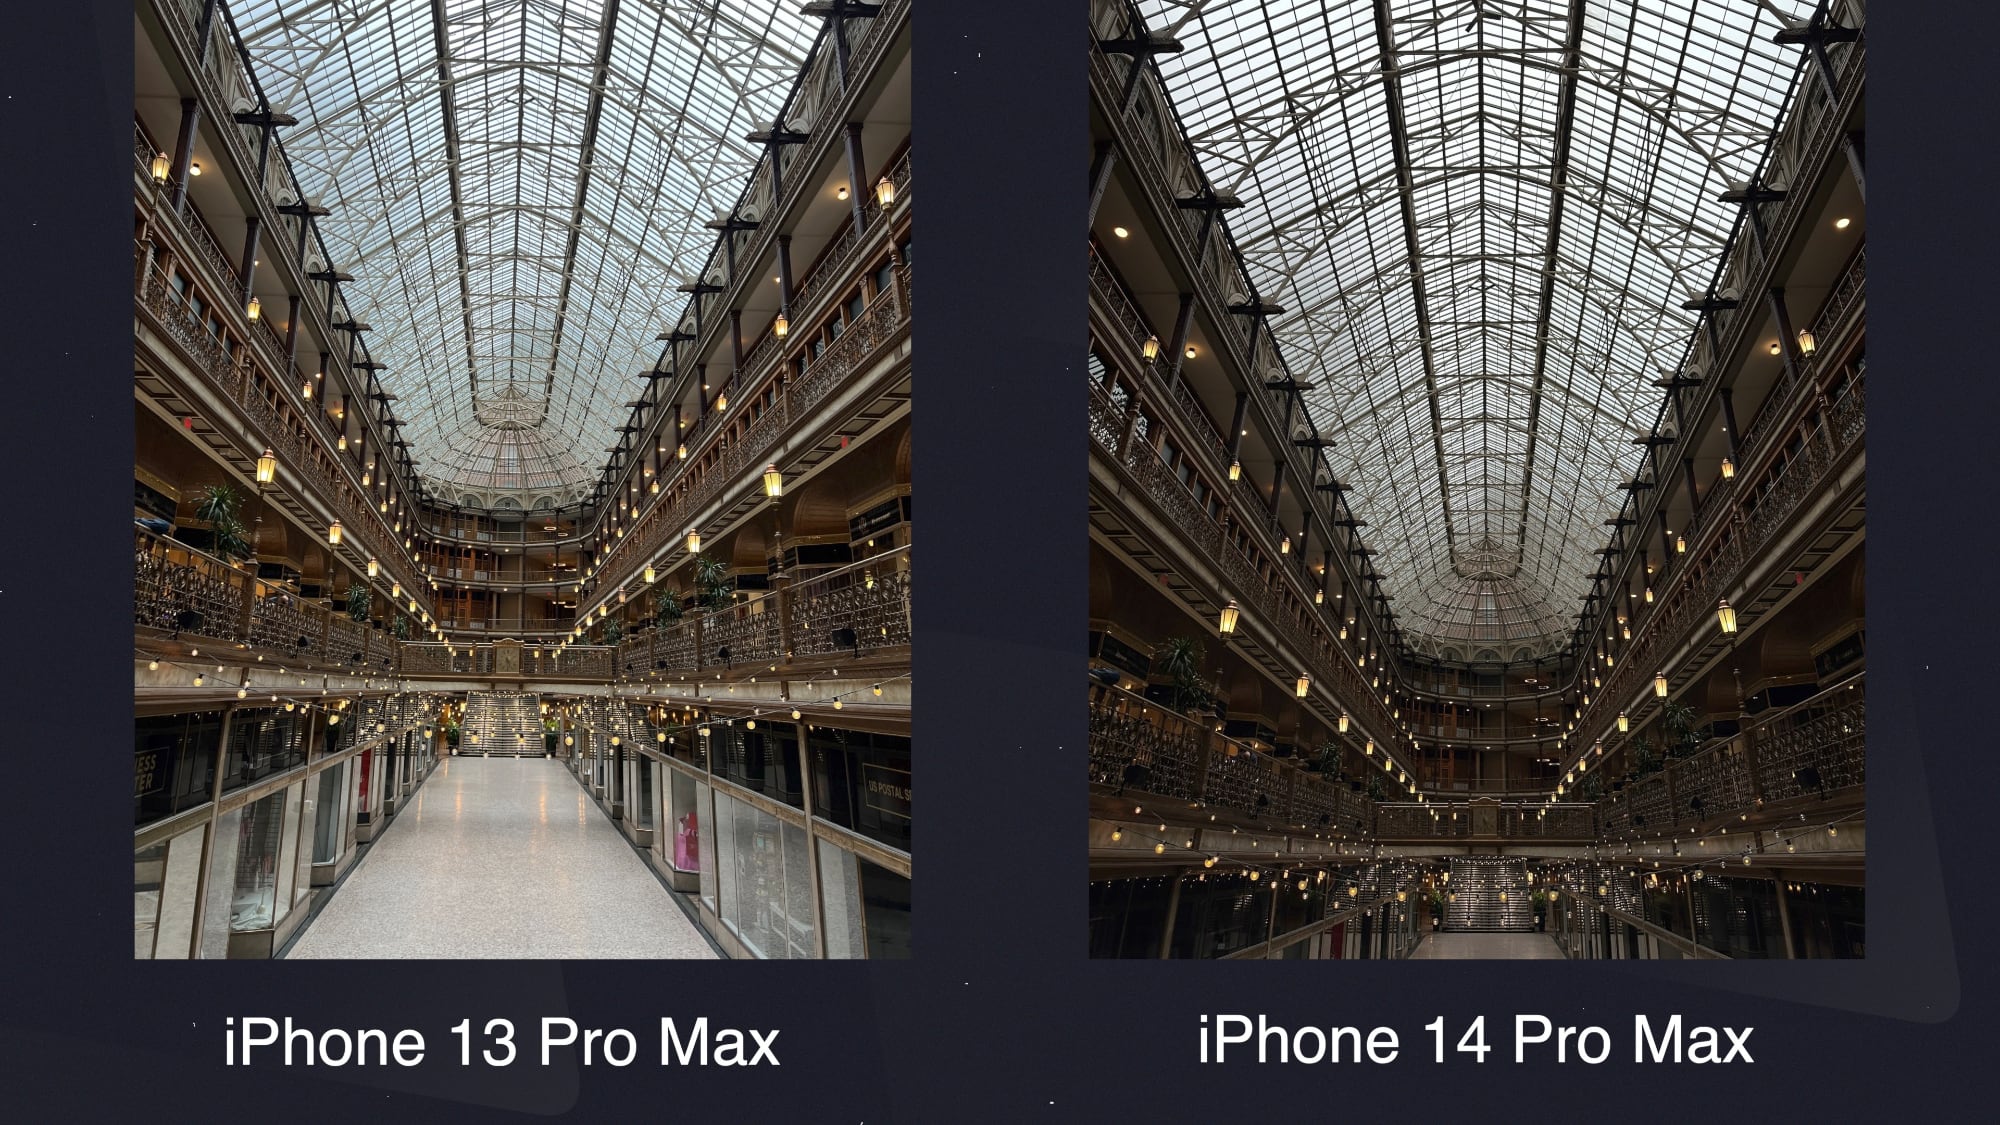 iphone-14-pro-max-vs-13-max-7.jpg